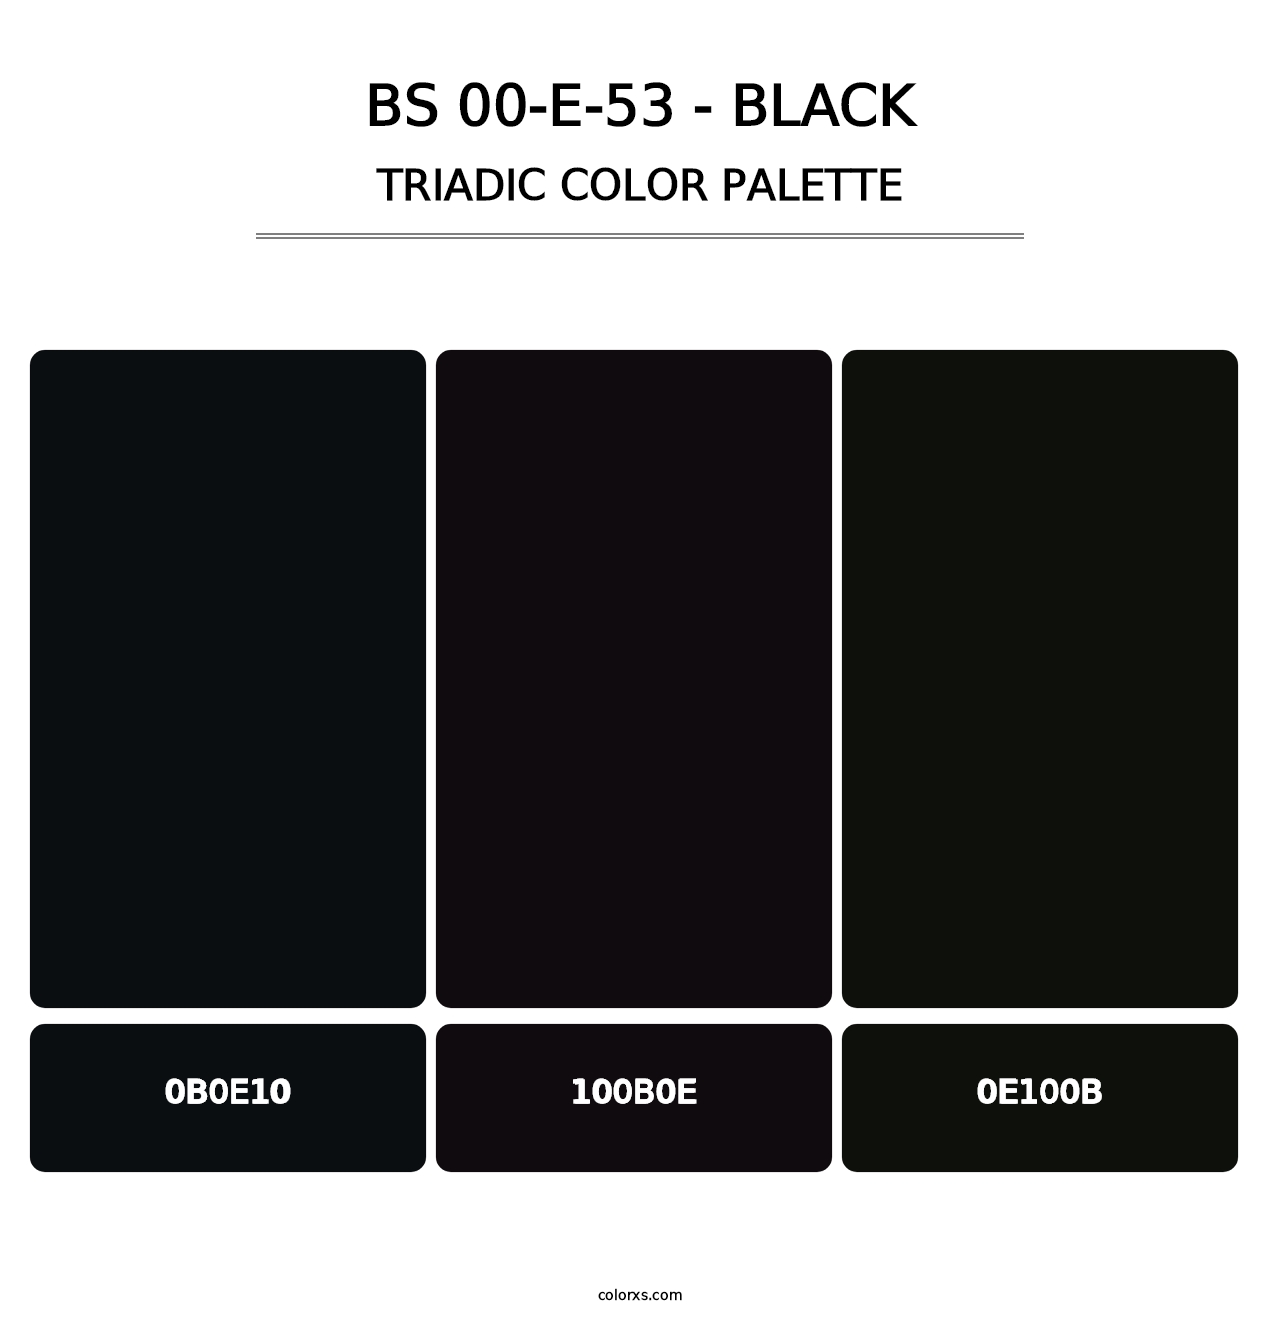 BS 00-E-53 - Black - Triadic Color Palette